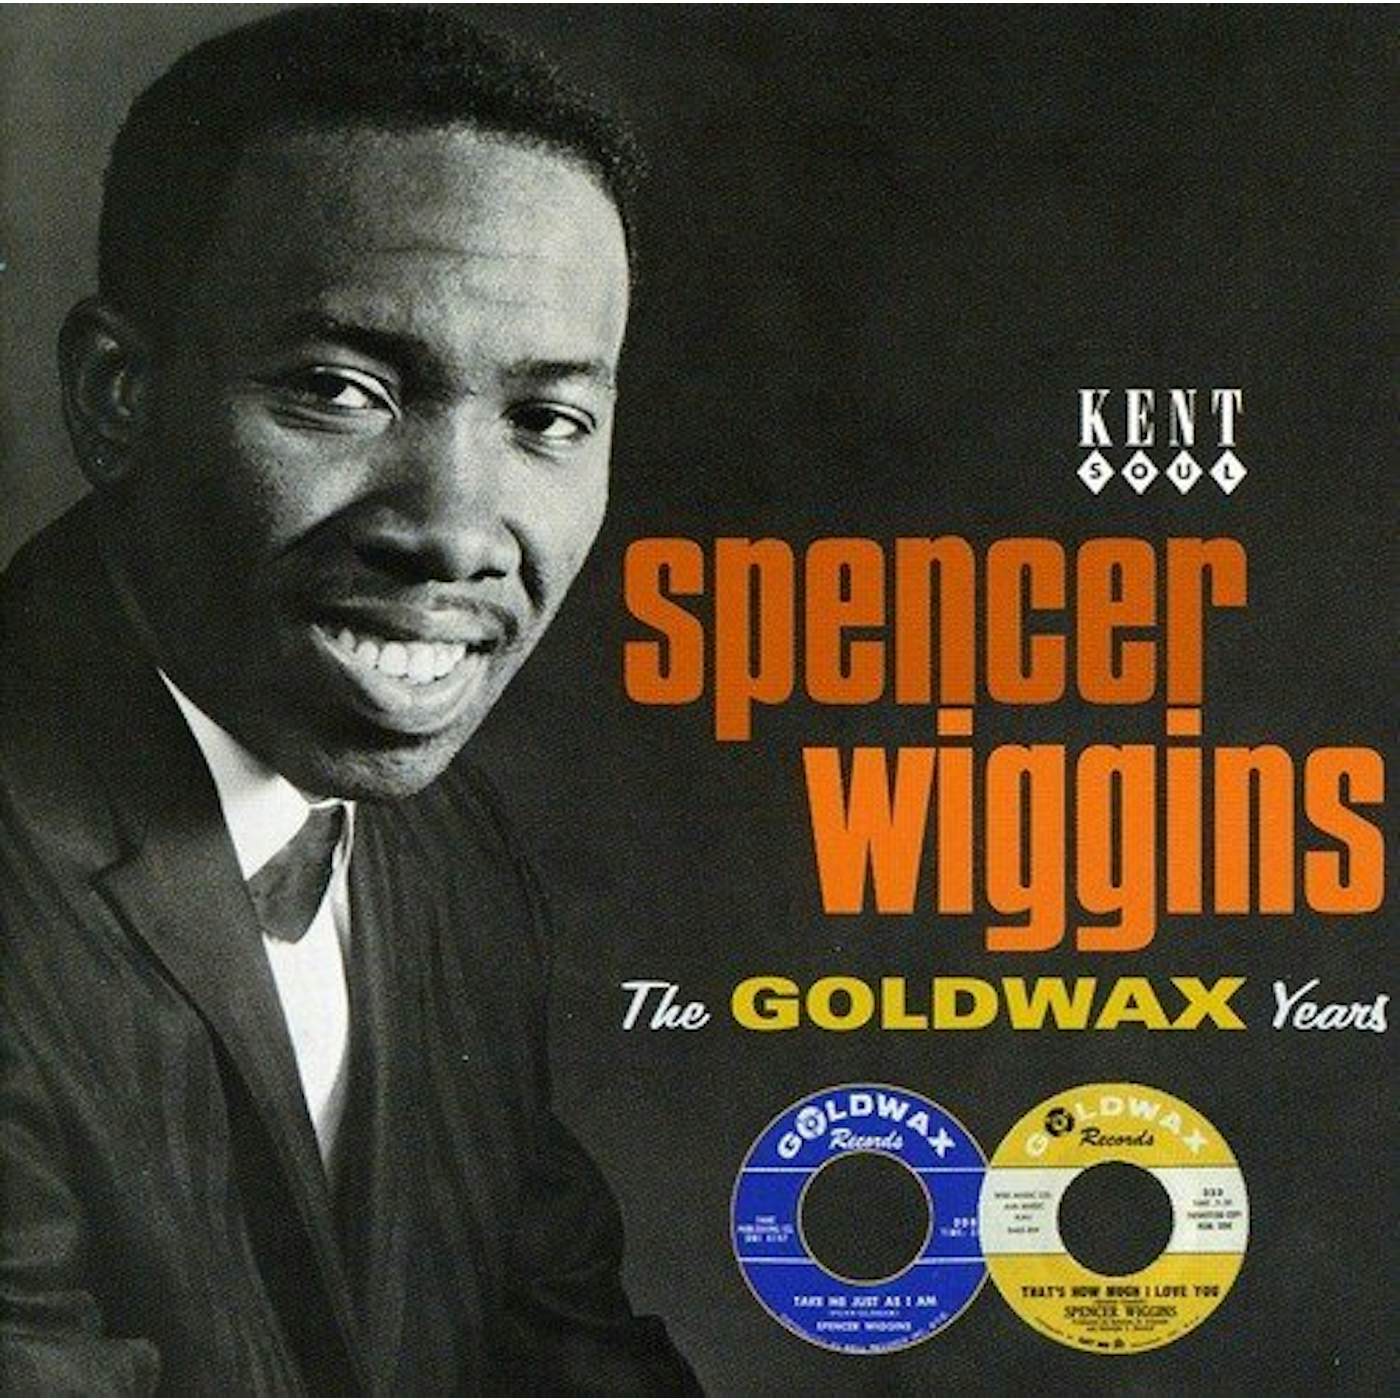 Spencer Wiggins GOLDWAX YEARS Vinyl Record